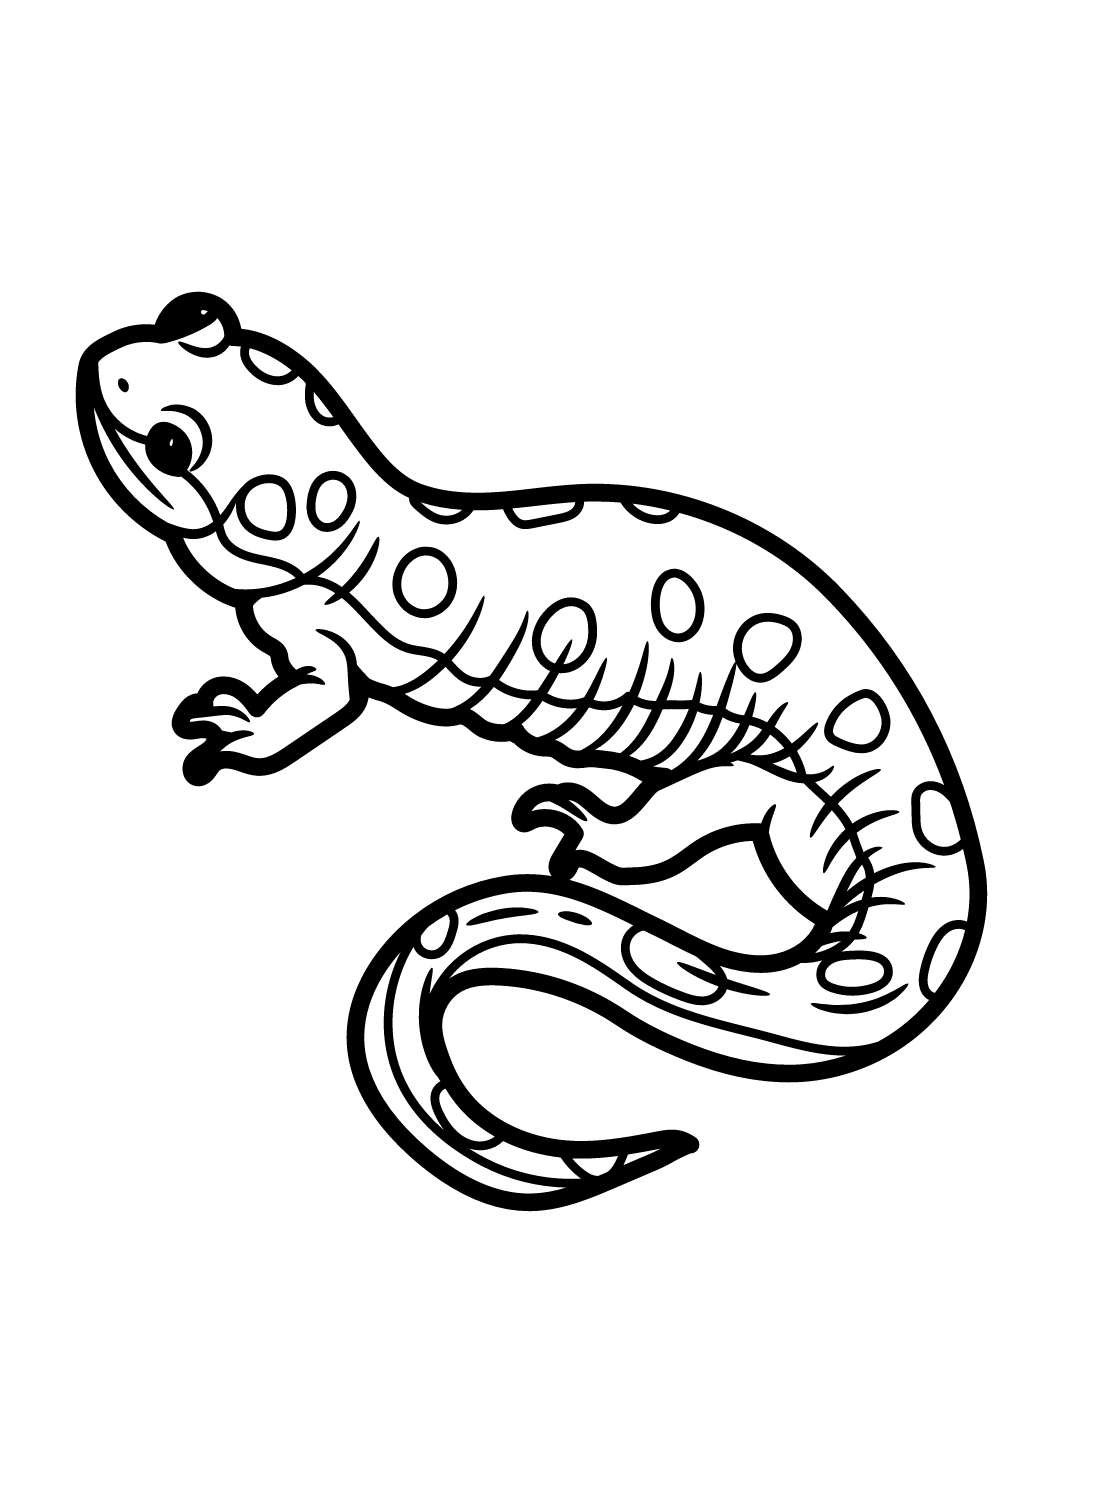 California Tiger Salamander Coloring Page